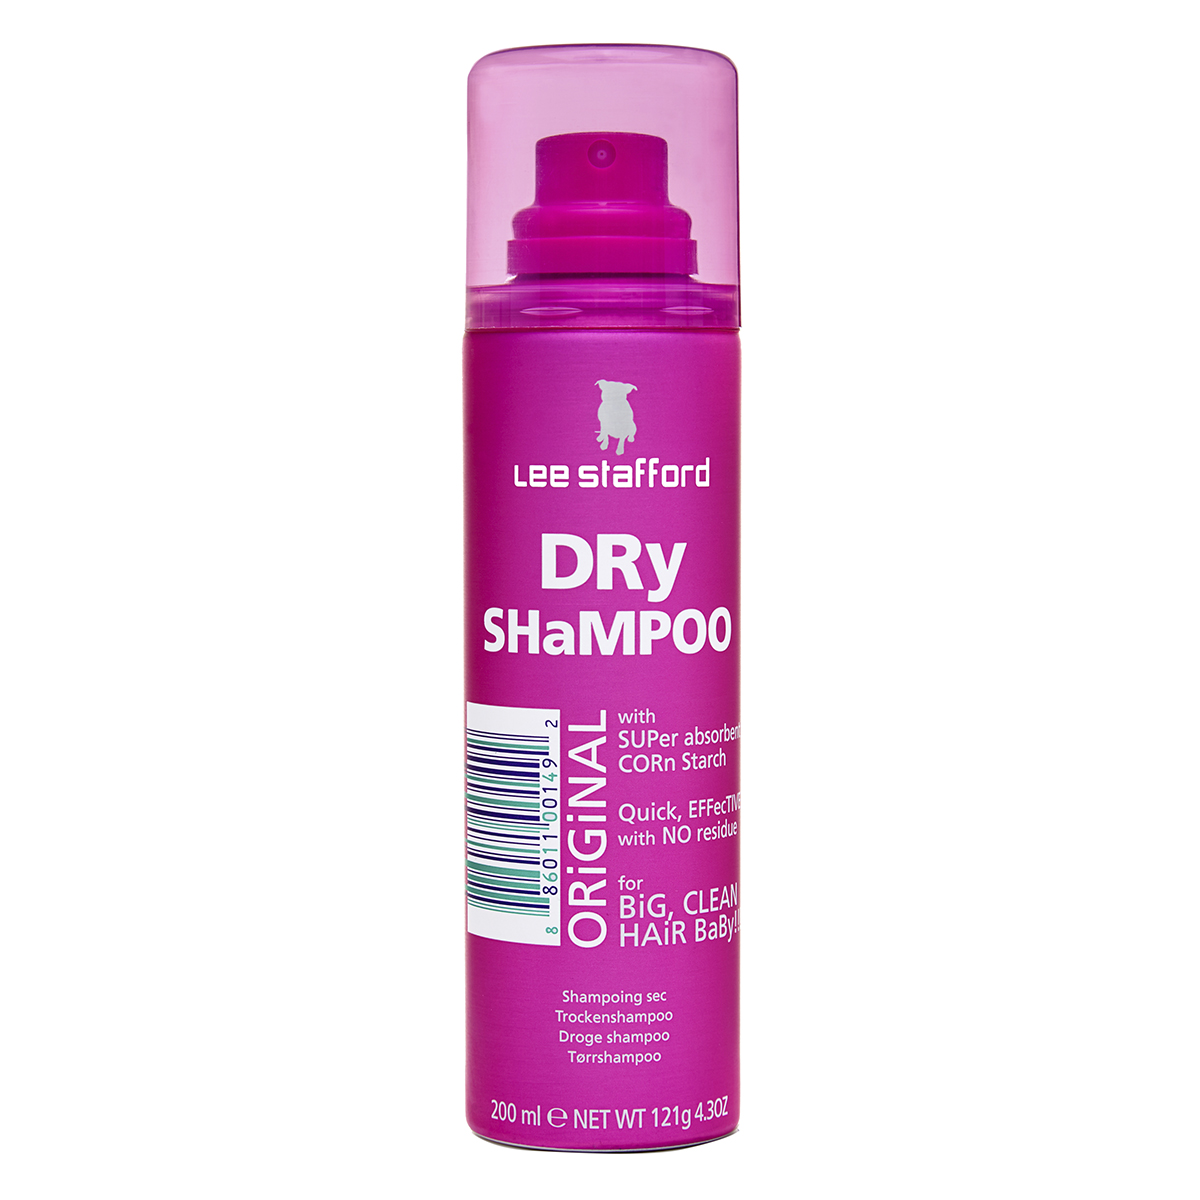 Shampoo Lee Stafford Dry Original